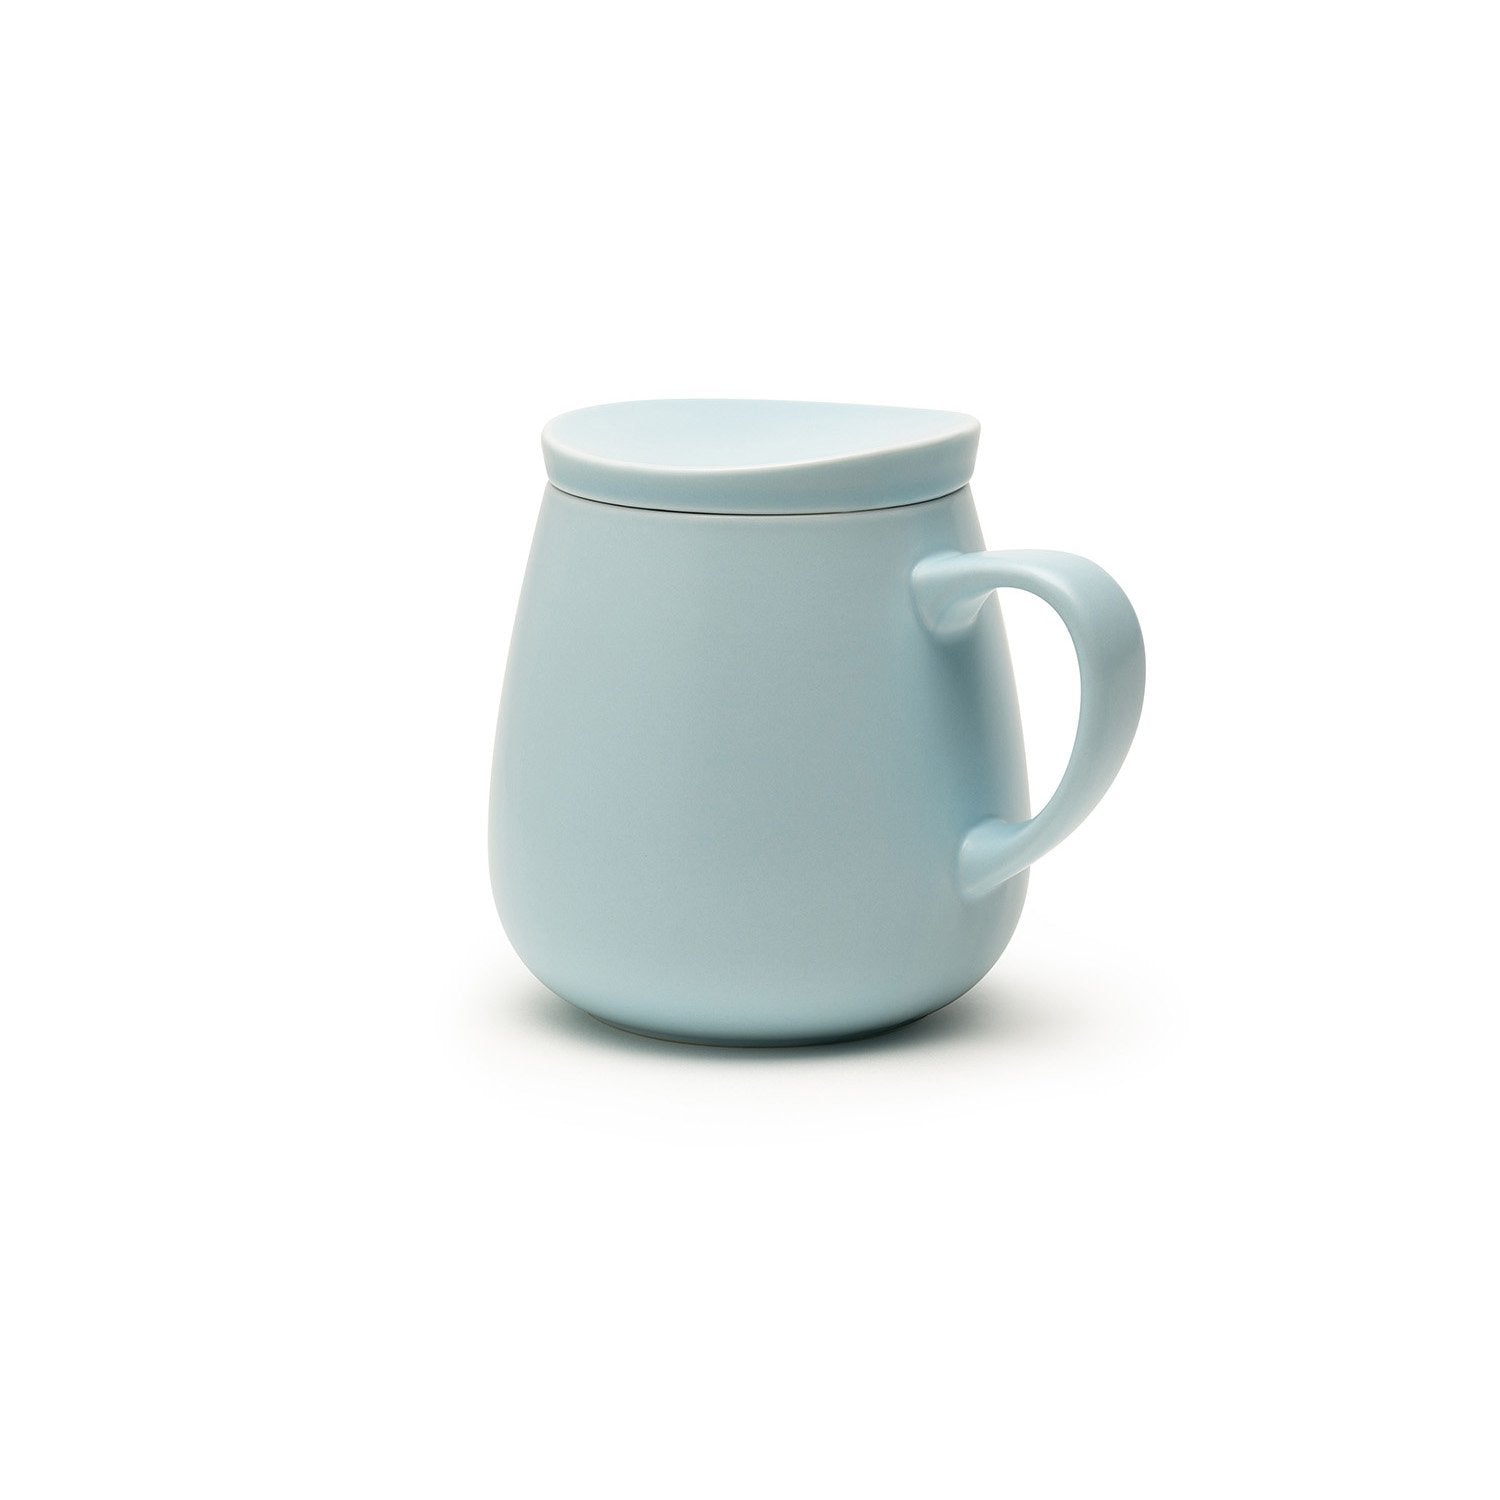 Large light blue mug with lid